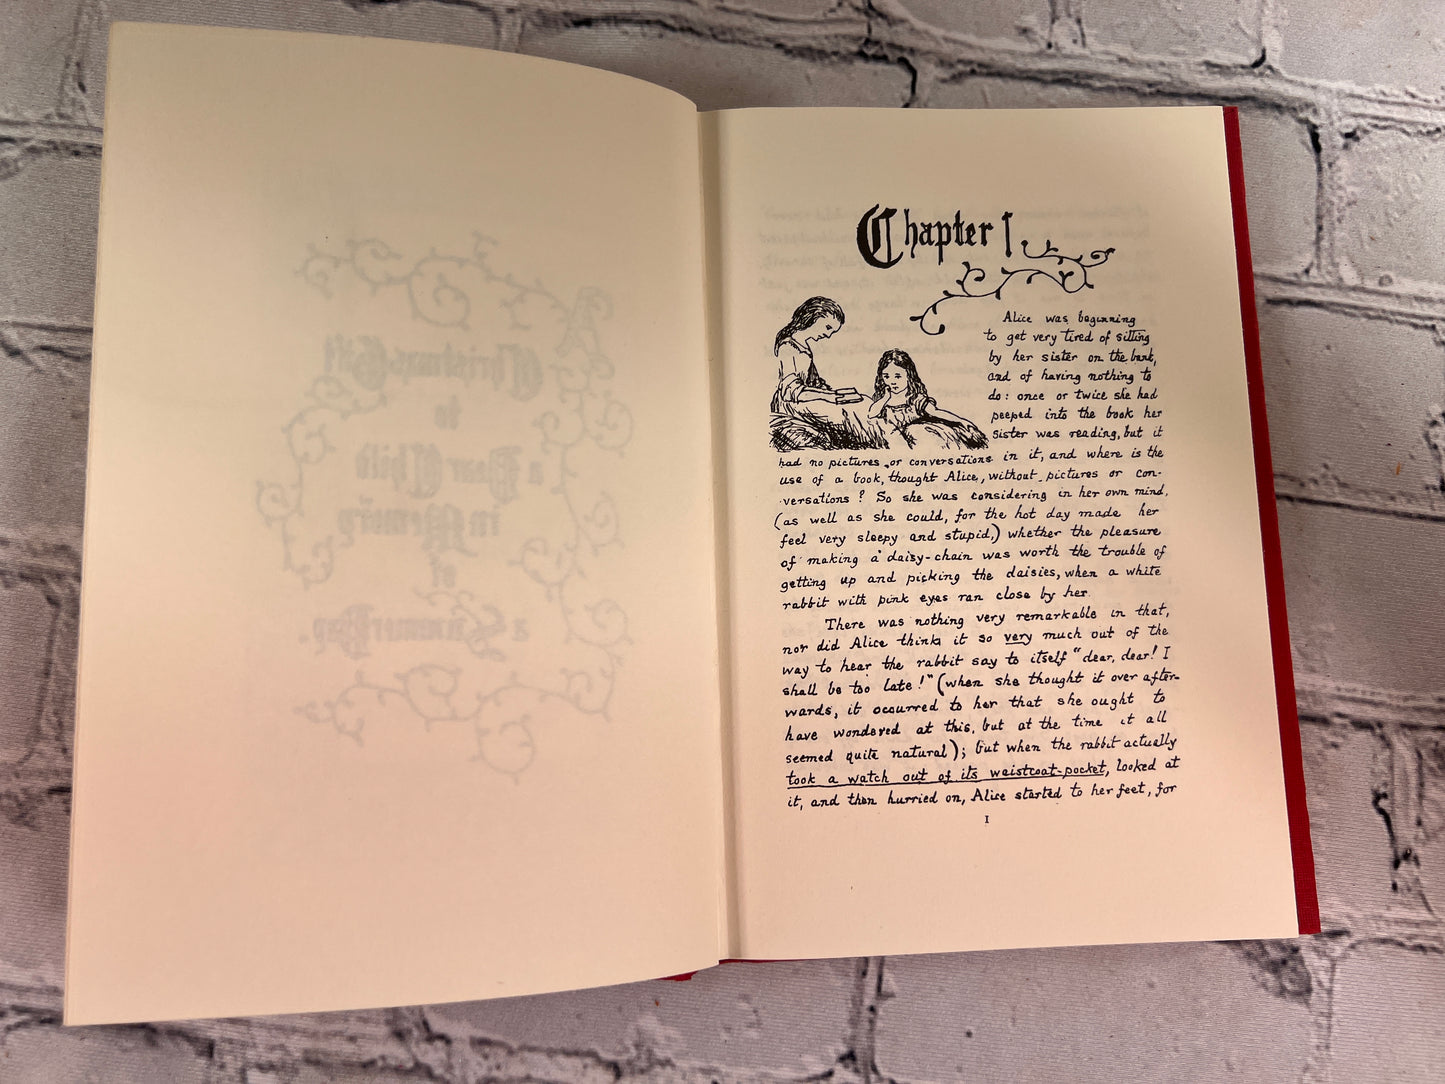 Alice's Adventures Under Ground by Lewis Carroll [1980]